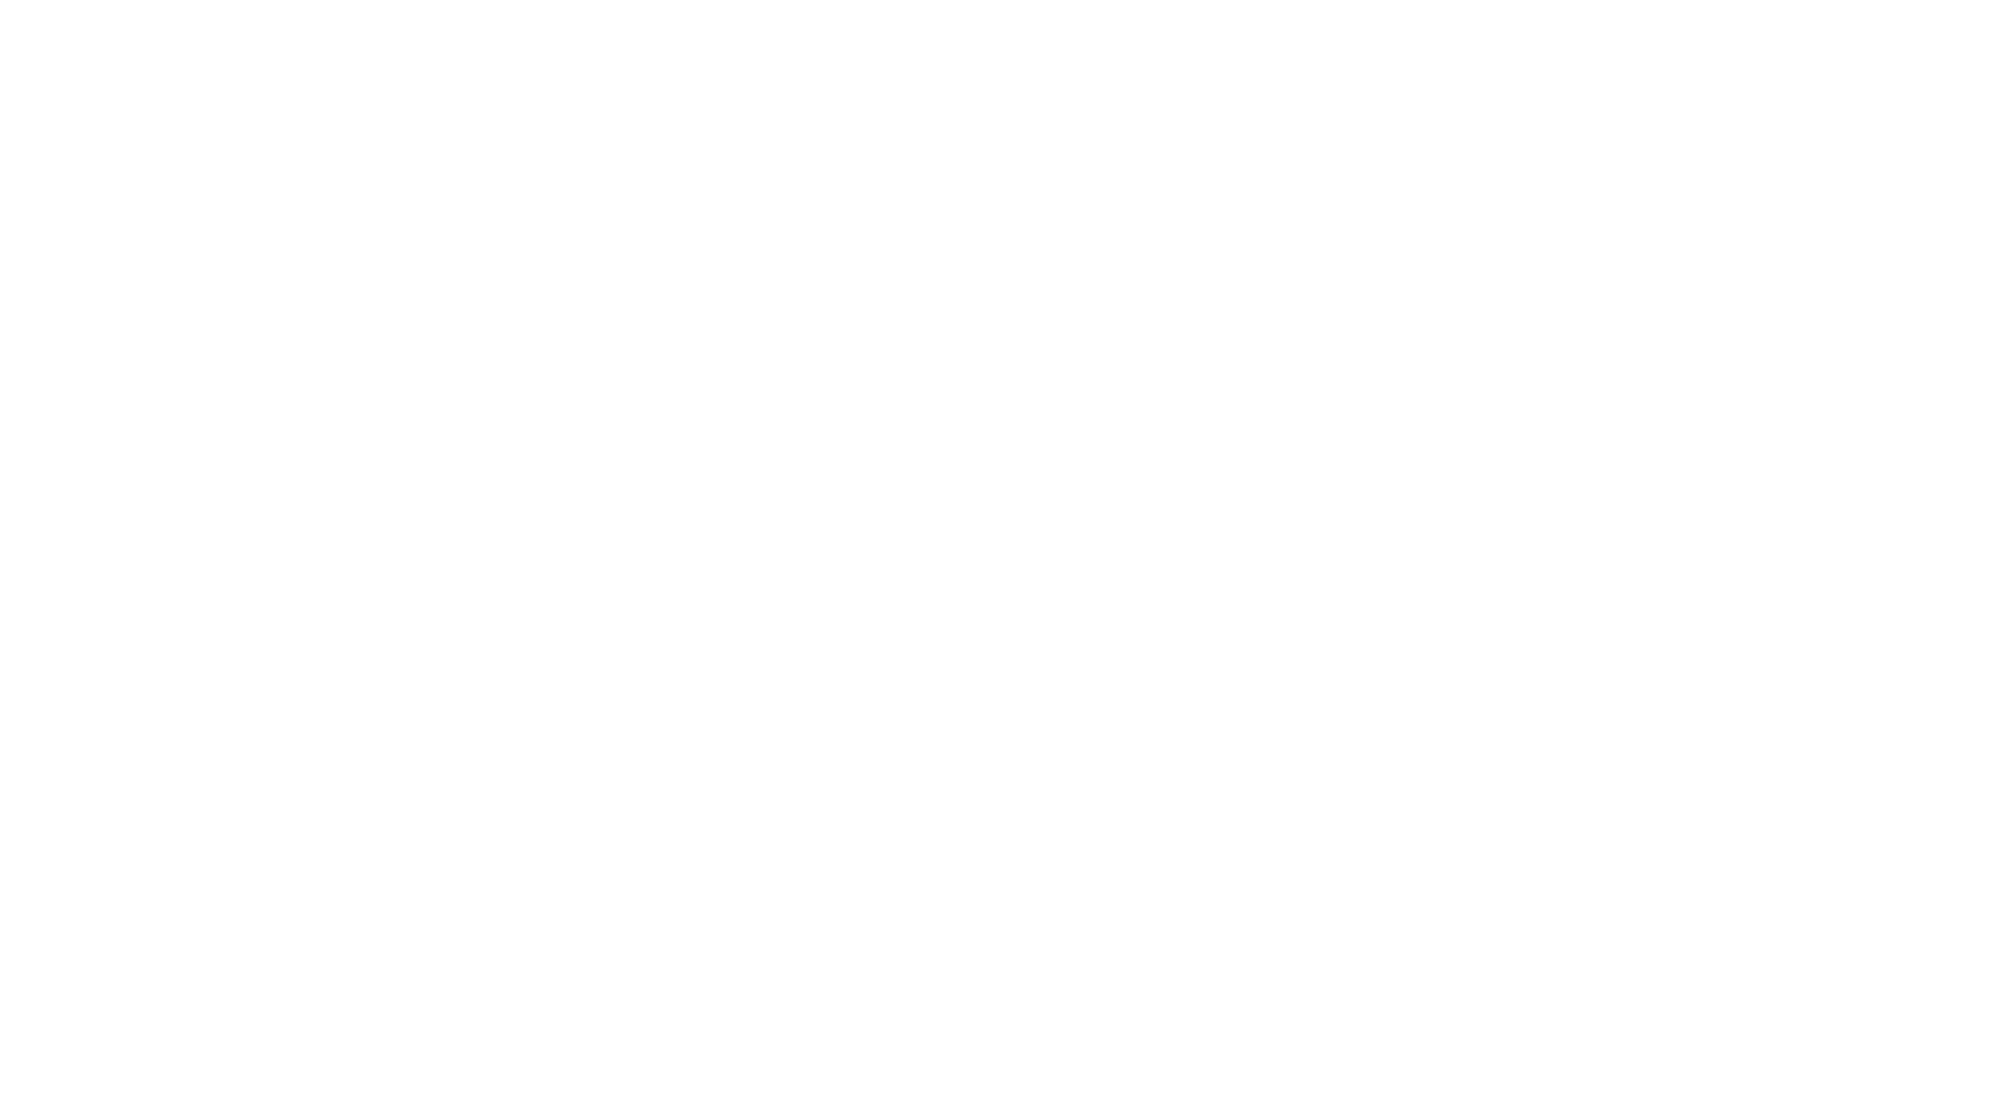 yachting wear